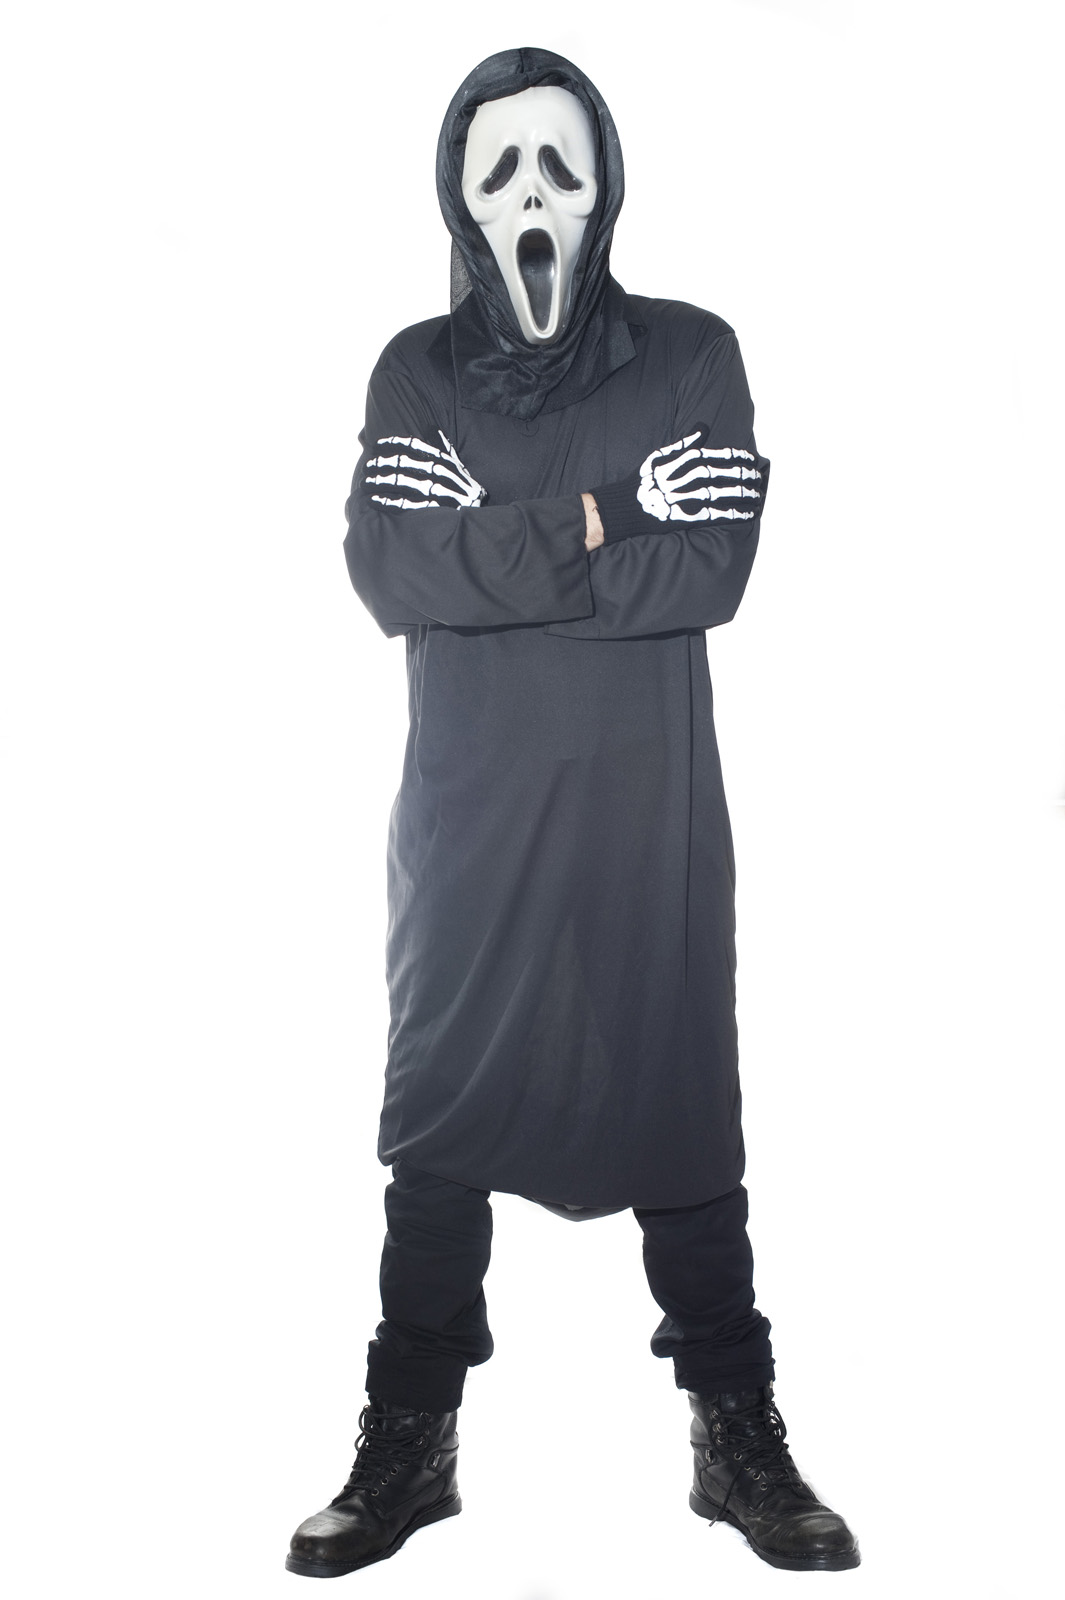 the skeleton man wearing a grey ghost suit is posing